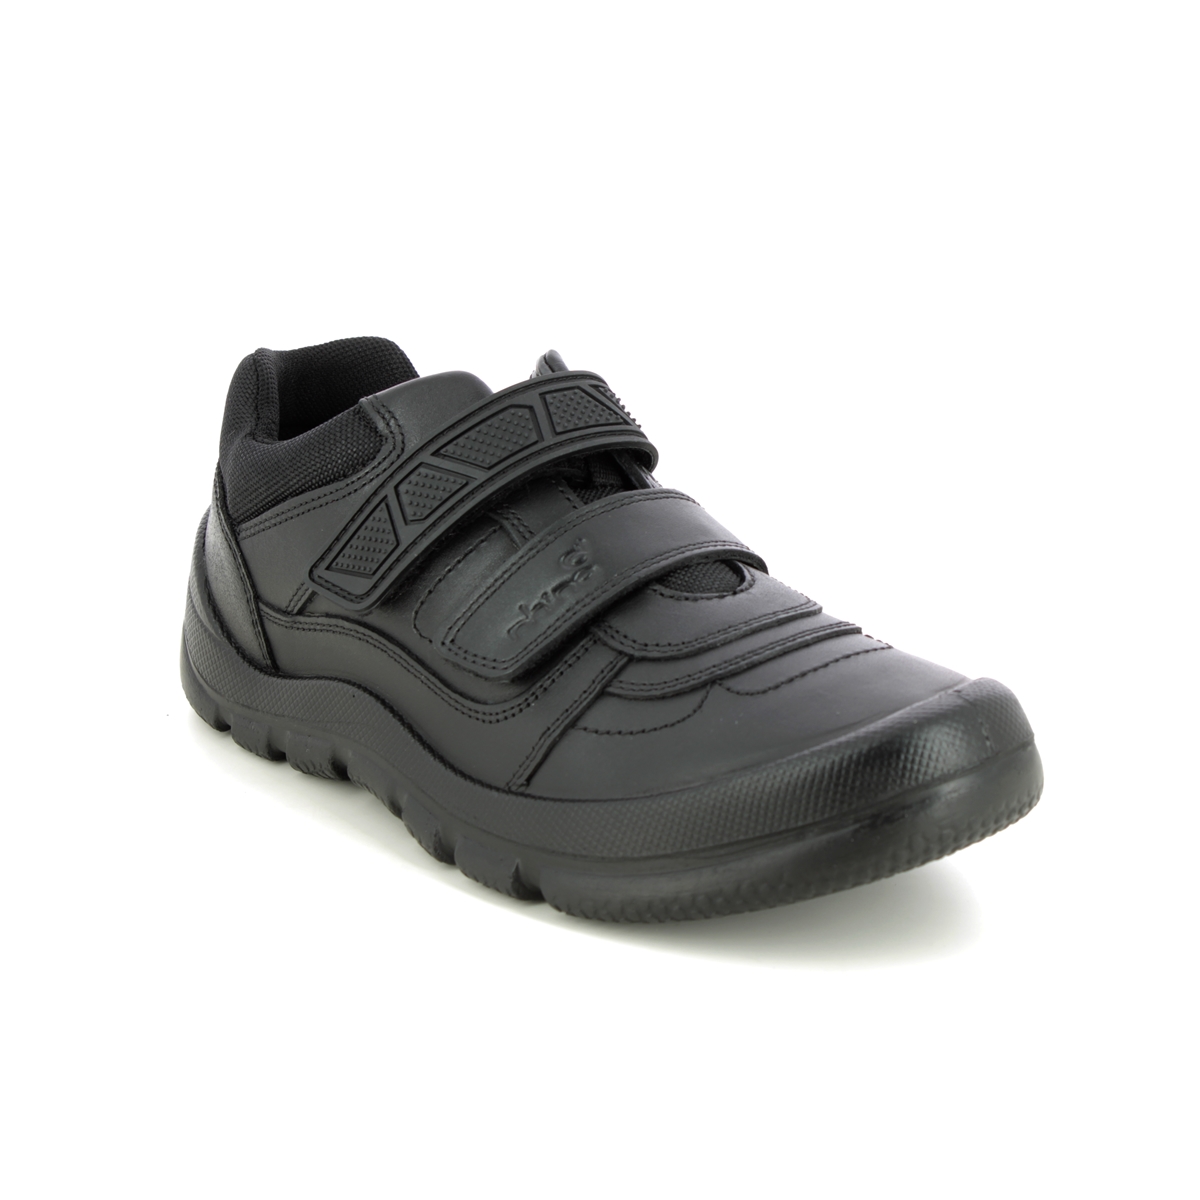 Start Rite - Rhino Warrior In Black Leather 8237-76F In Size 6 In Plain Black Leather For School Boys Shoes  In Black Leather For kids